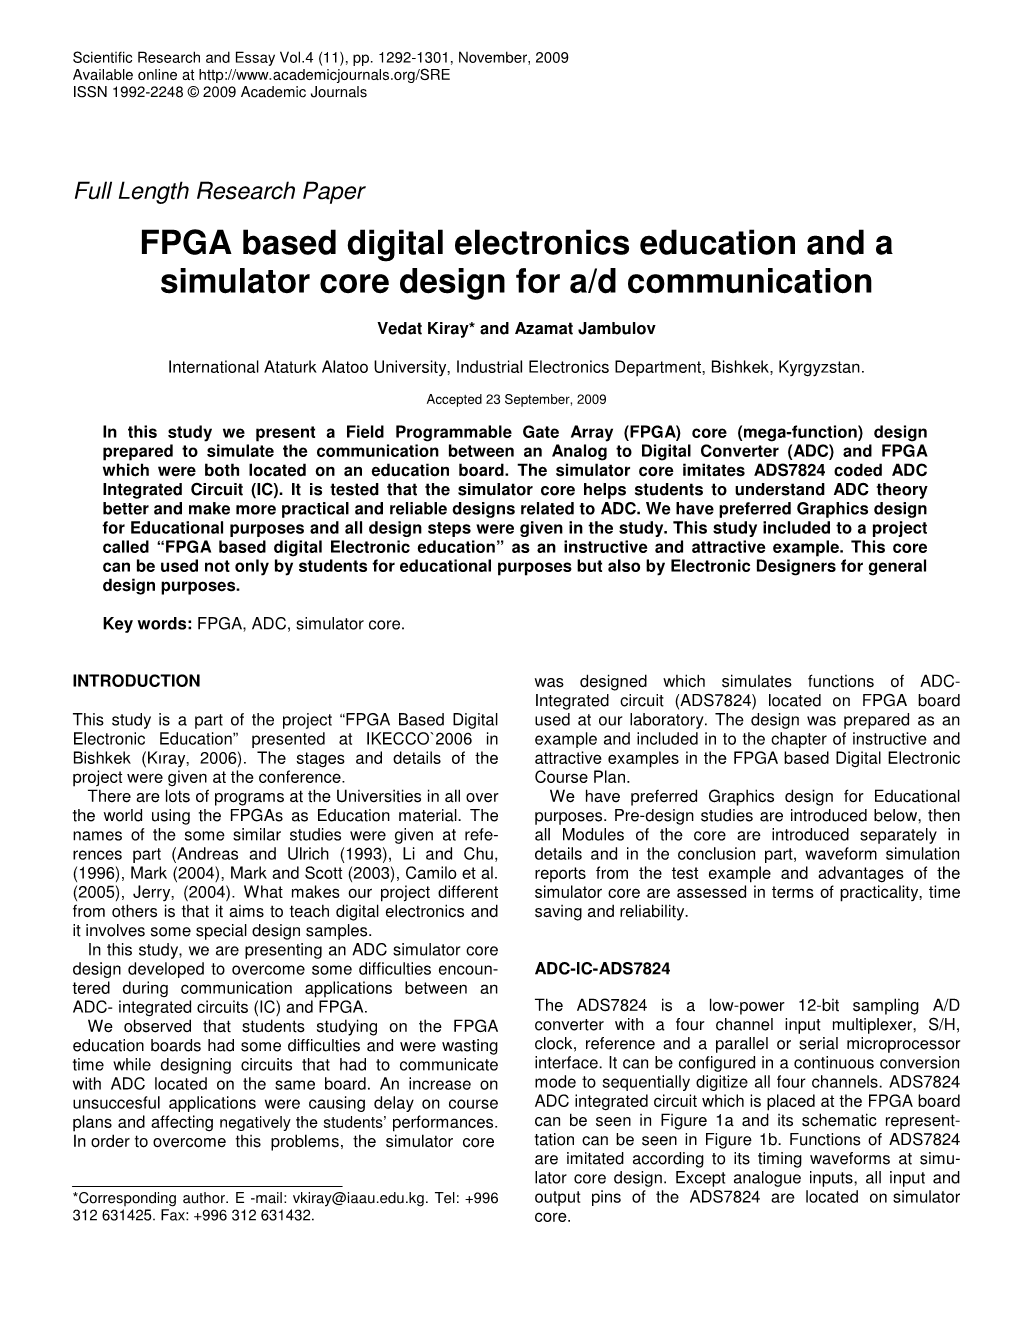 FPGA Based Digital Electronics Education and a Simulator Core Design for A/D Communication